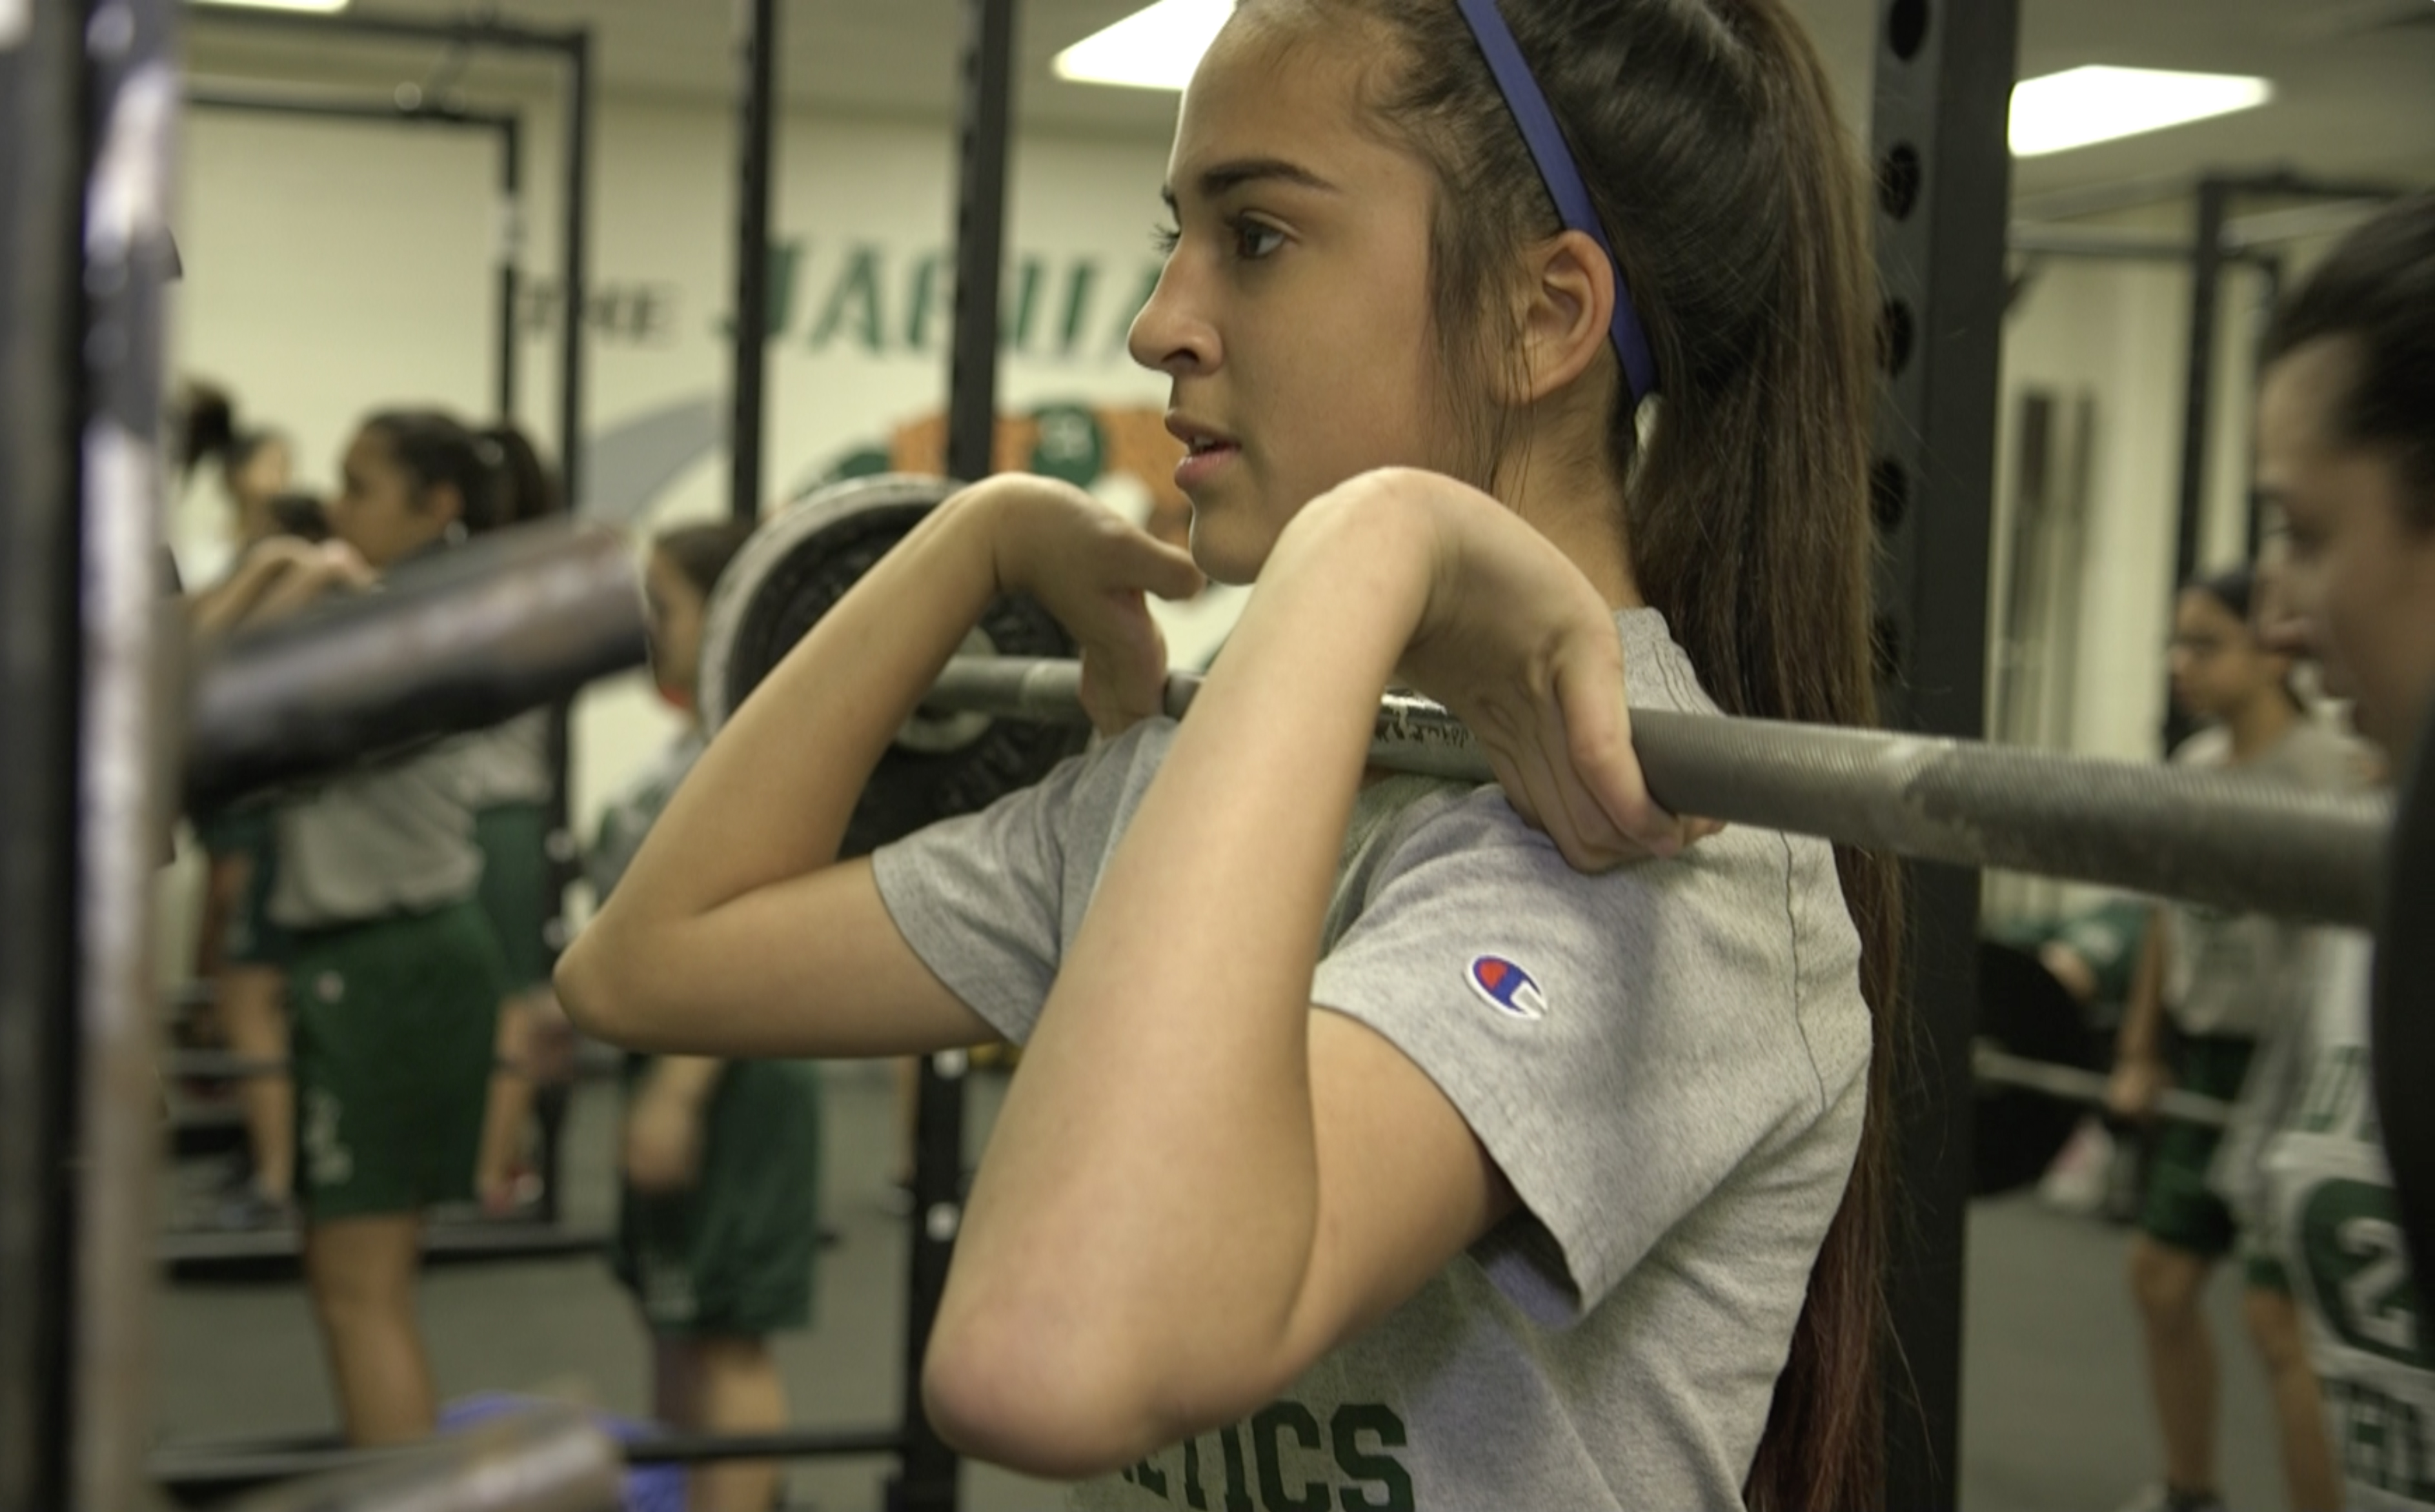 Gutierrez Athletics: Teaching students life skills through sports